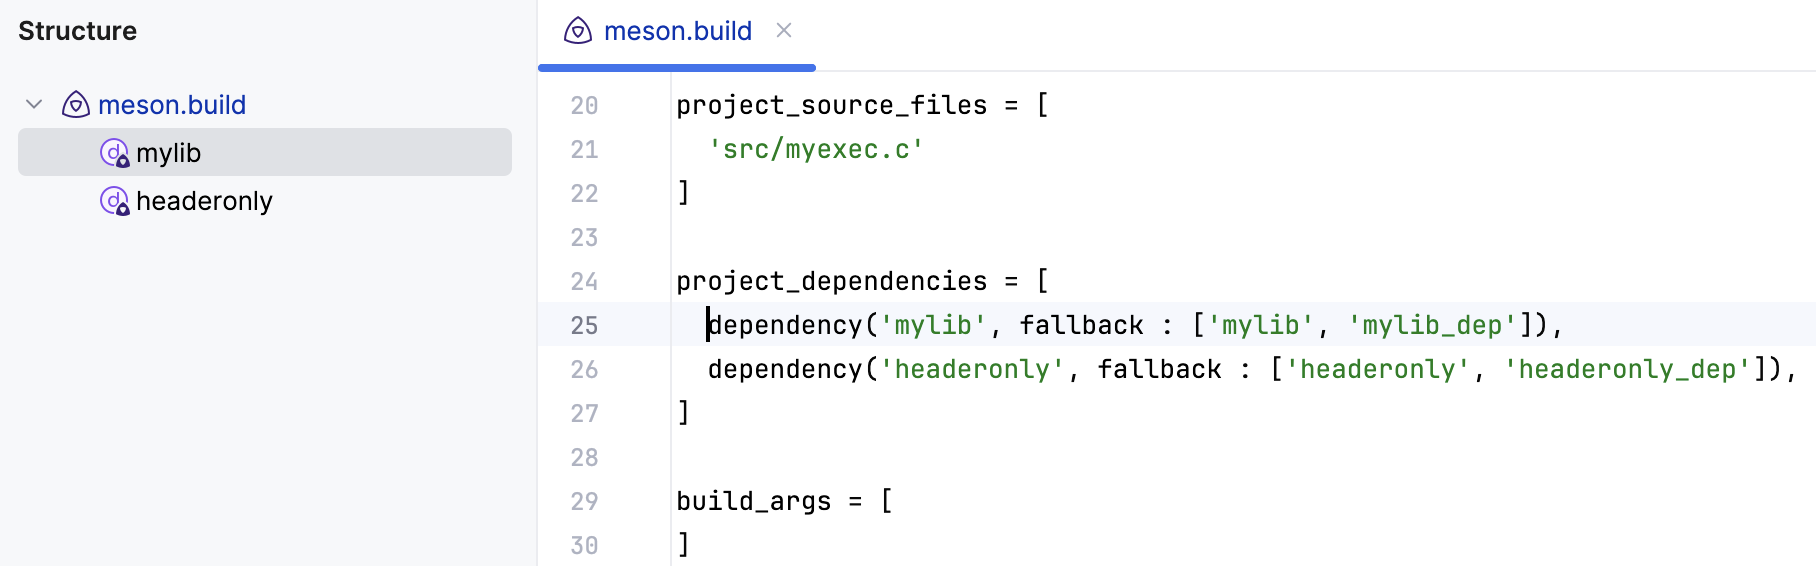 Meson.build file structure